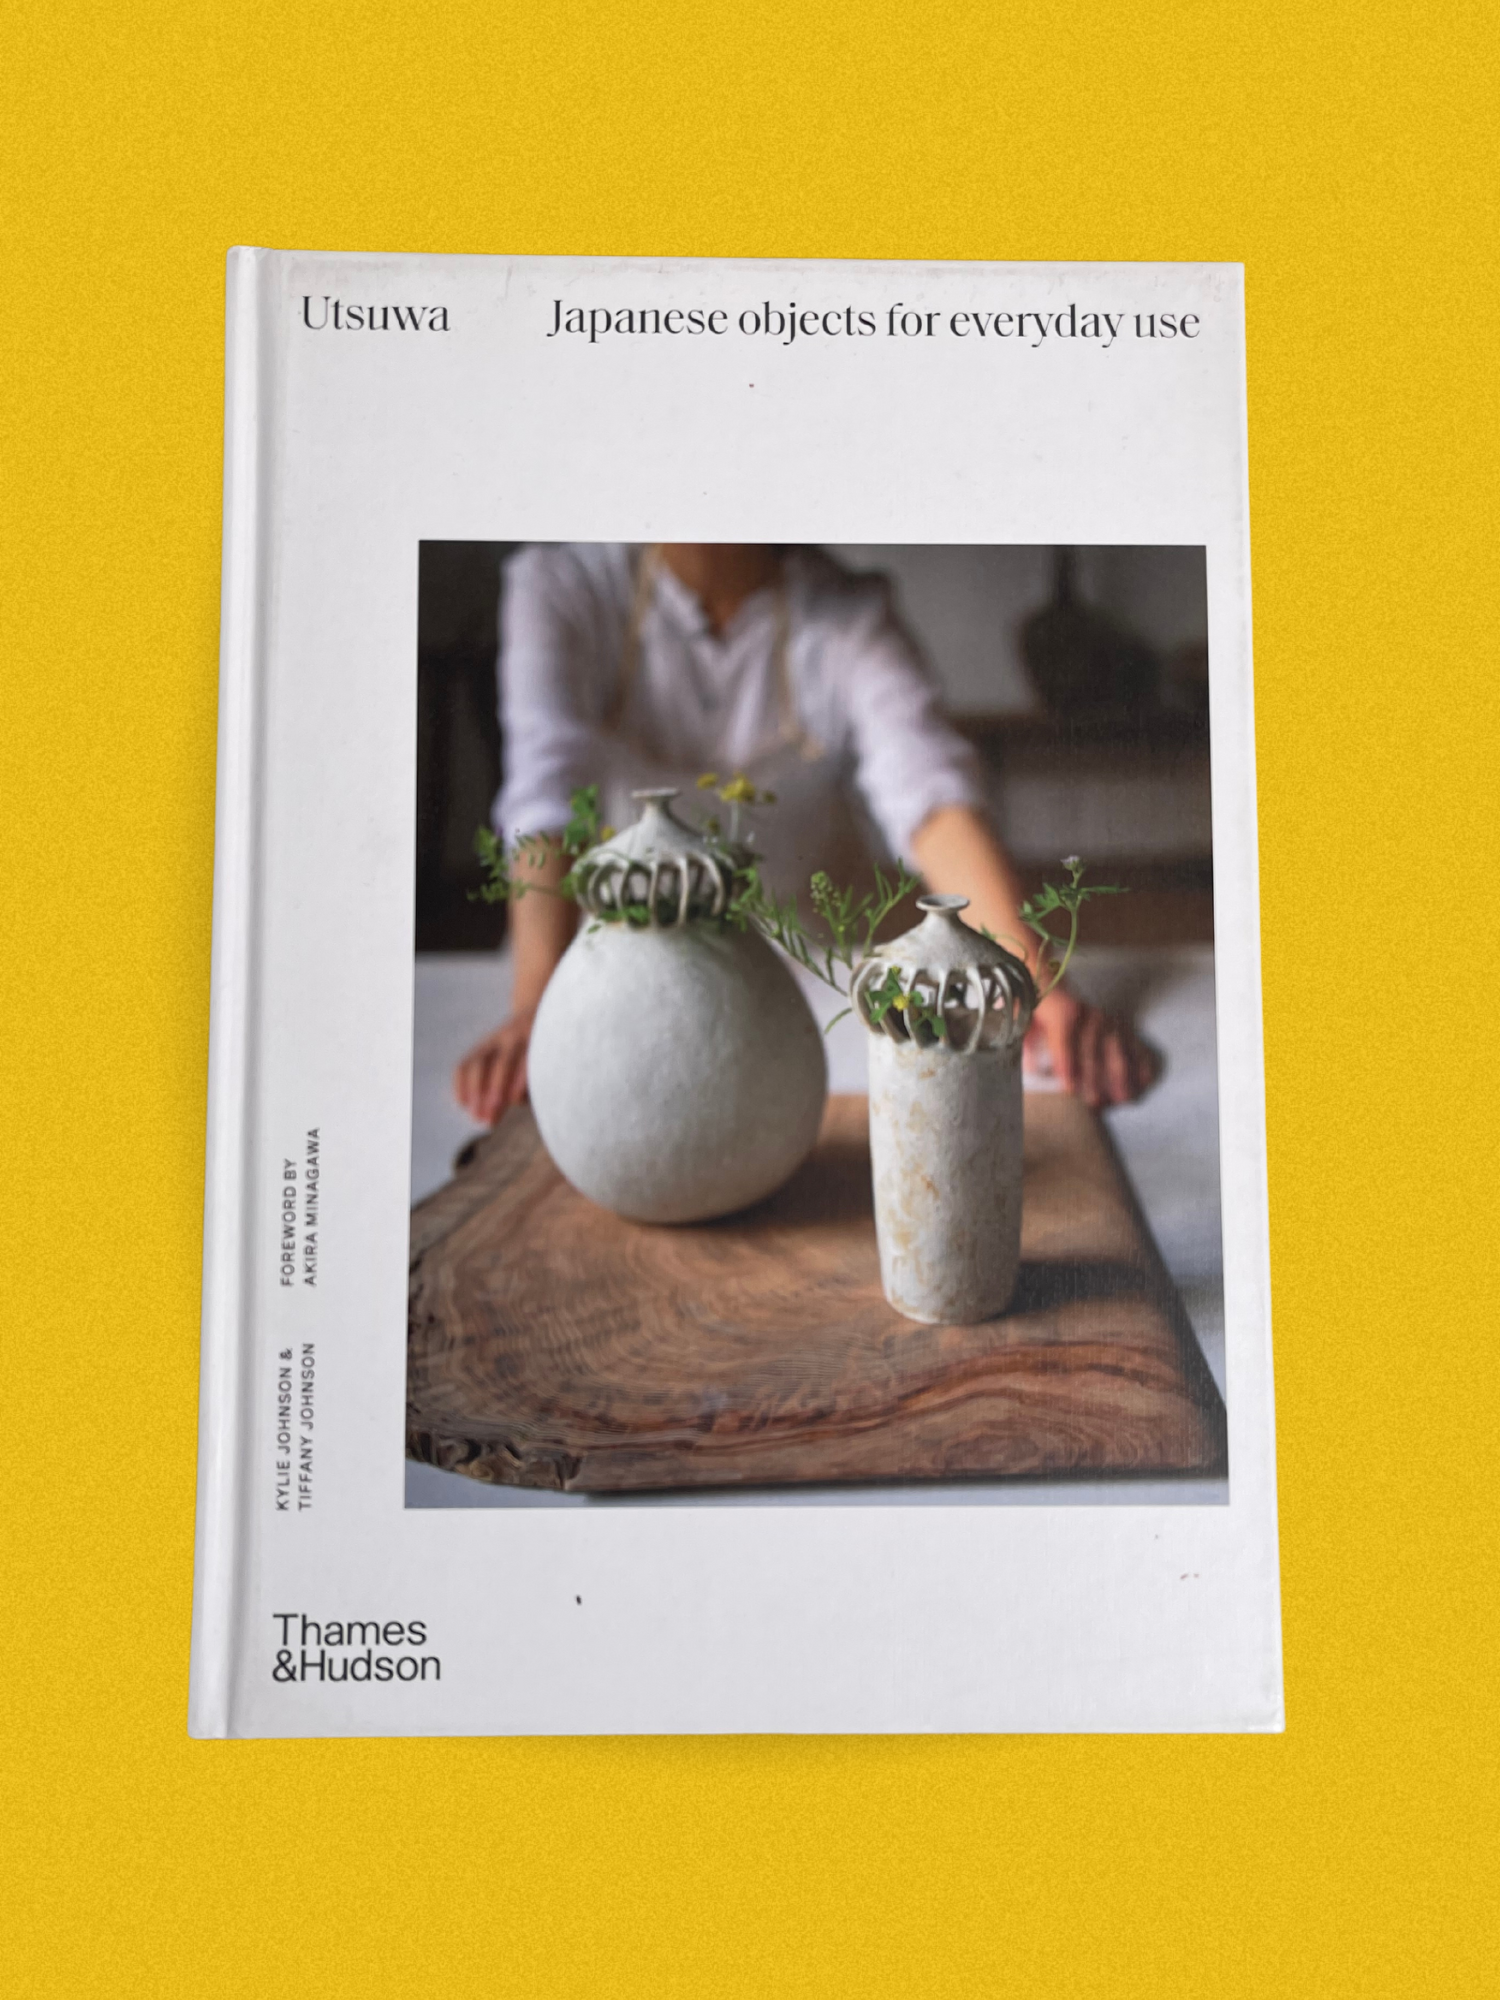 Utsuwa - Japanese objects for everyday use